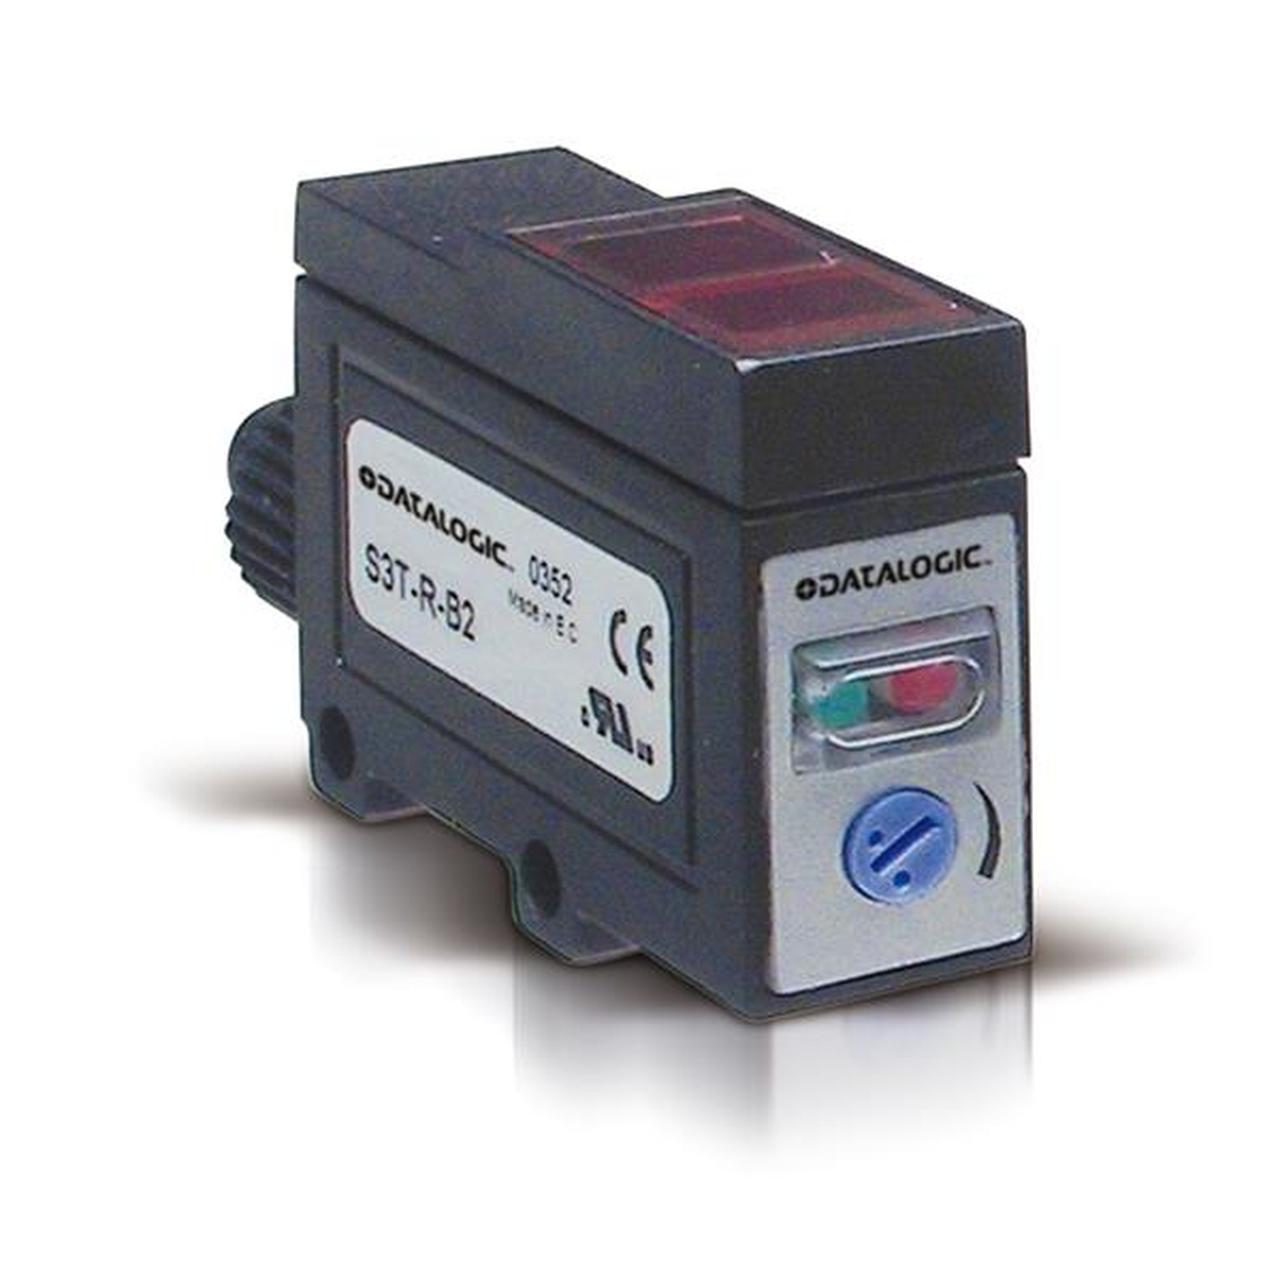 Sensor Datalogic S3-R-A2.5